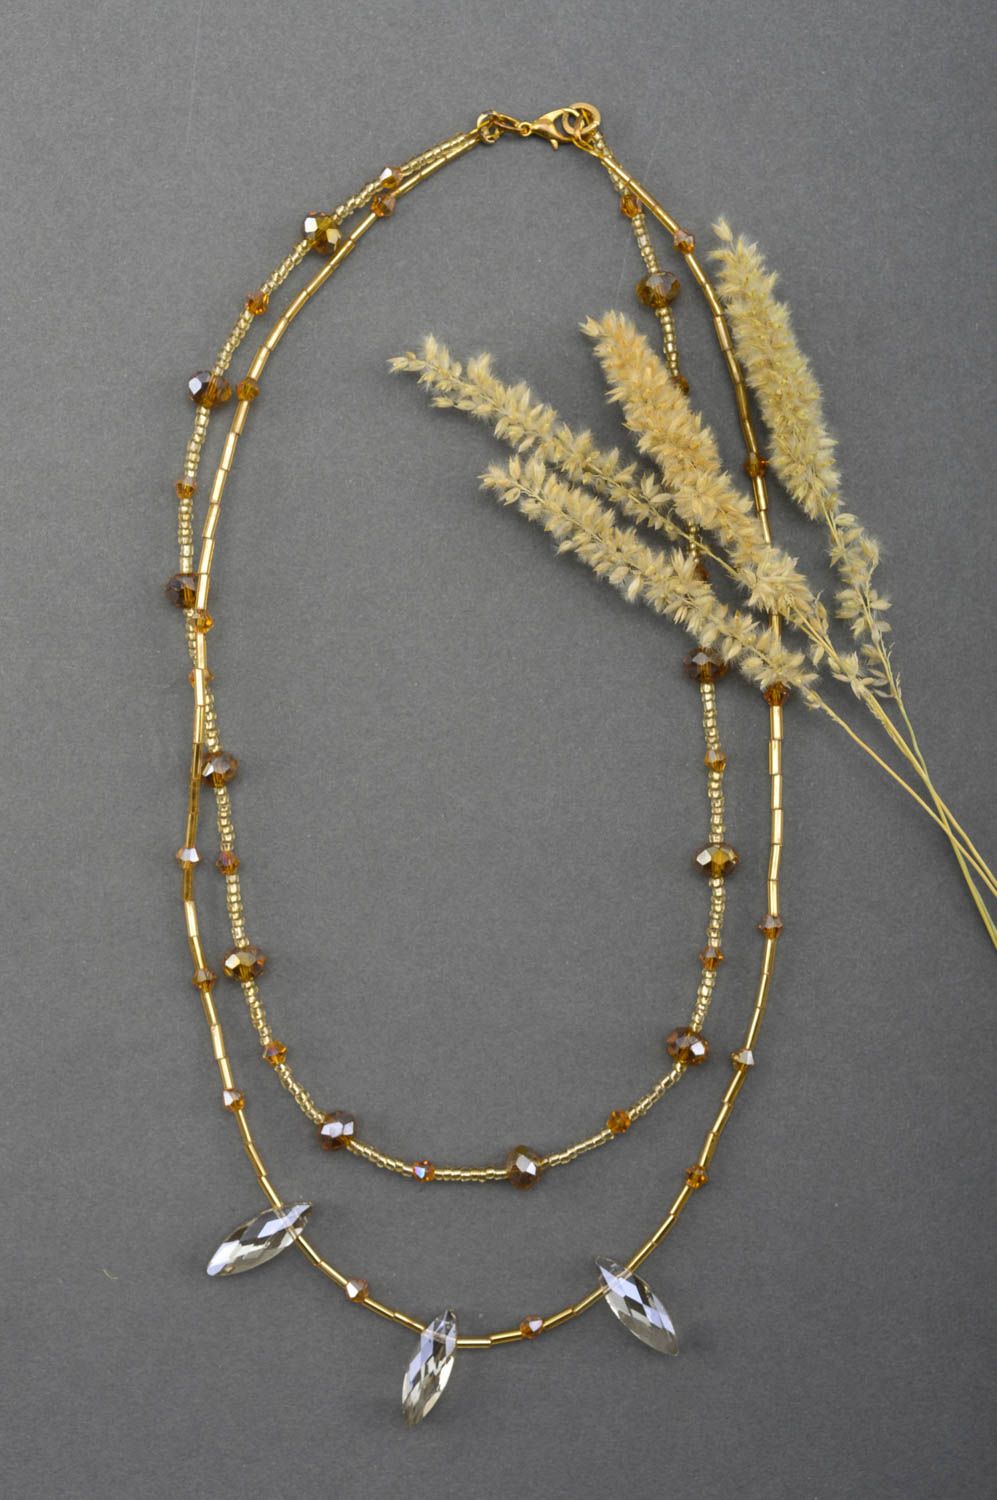 Unusual handmade beaded necklace design artisan jewelry fashion accessories photo 1